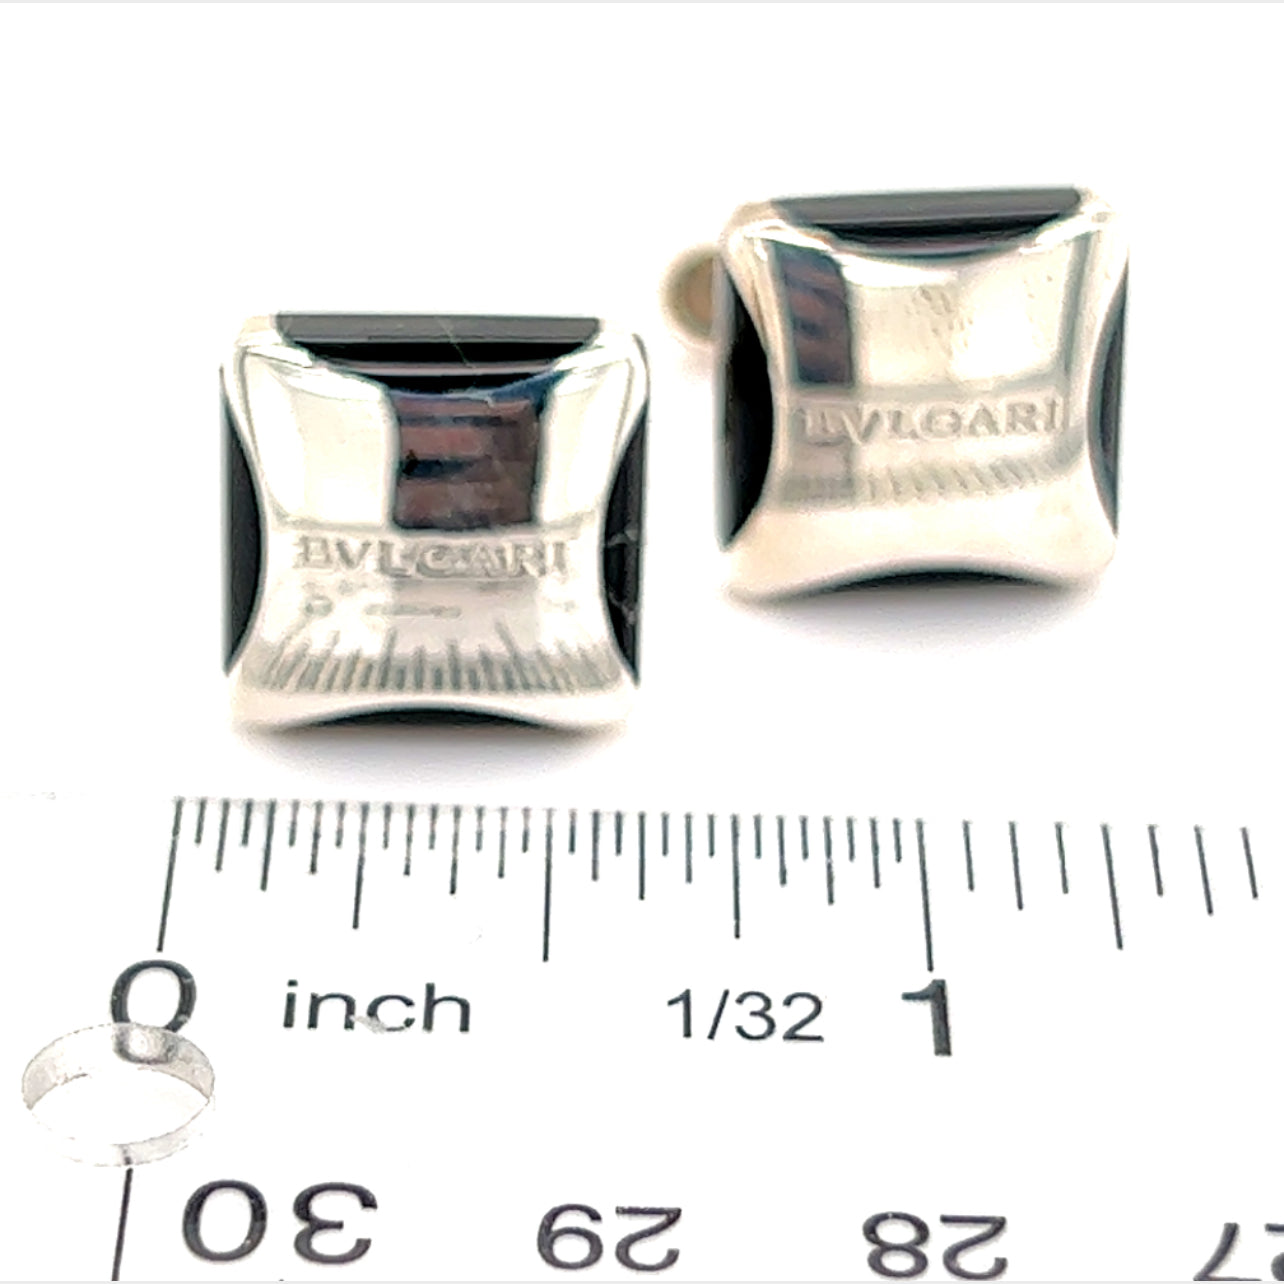 Bulgari Estate Onyx Cufflinks Sterling Silver 19.24 Grams B1 - Certified Estate Jewelry